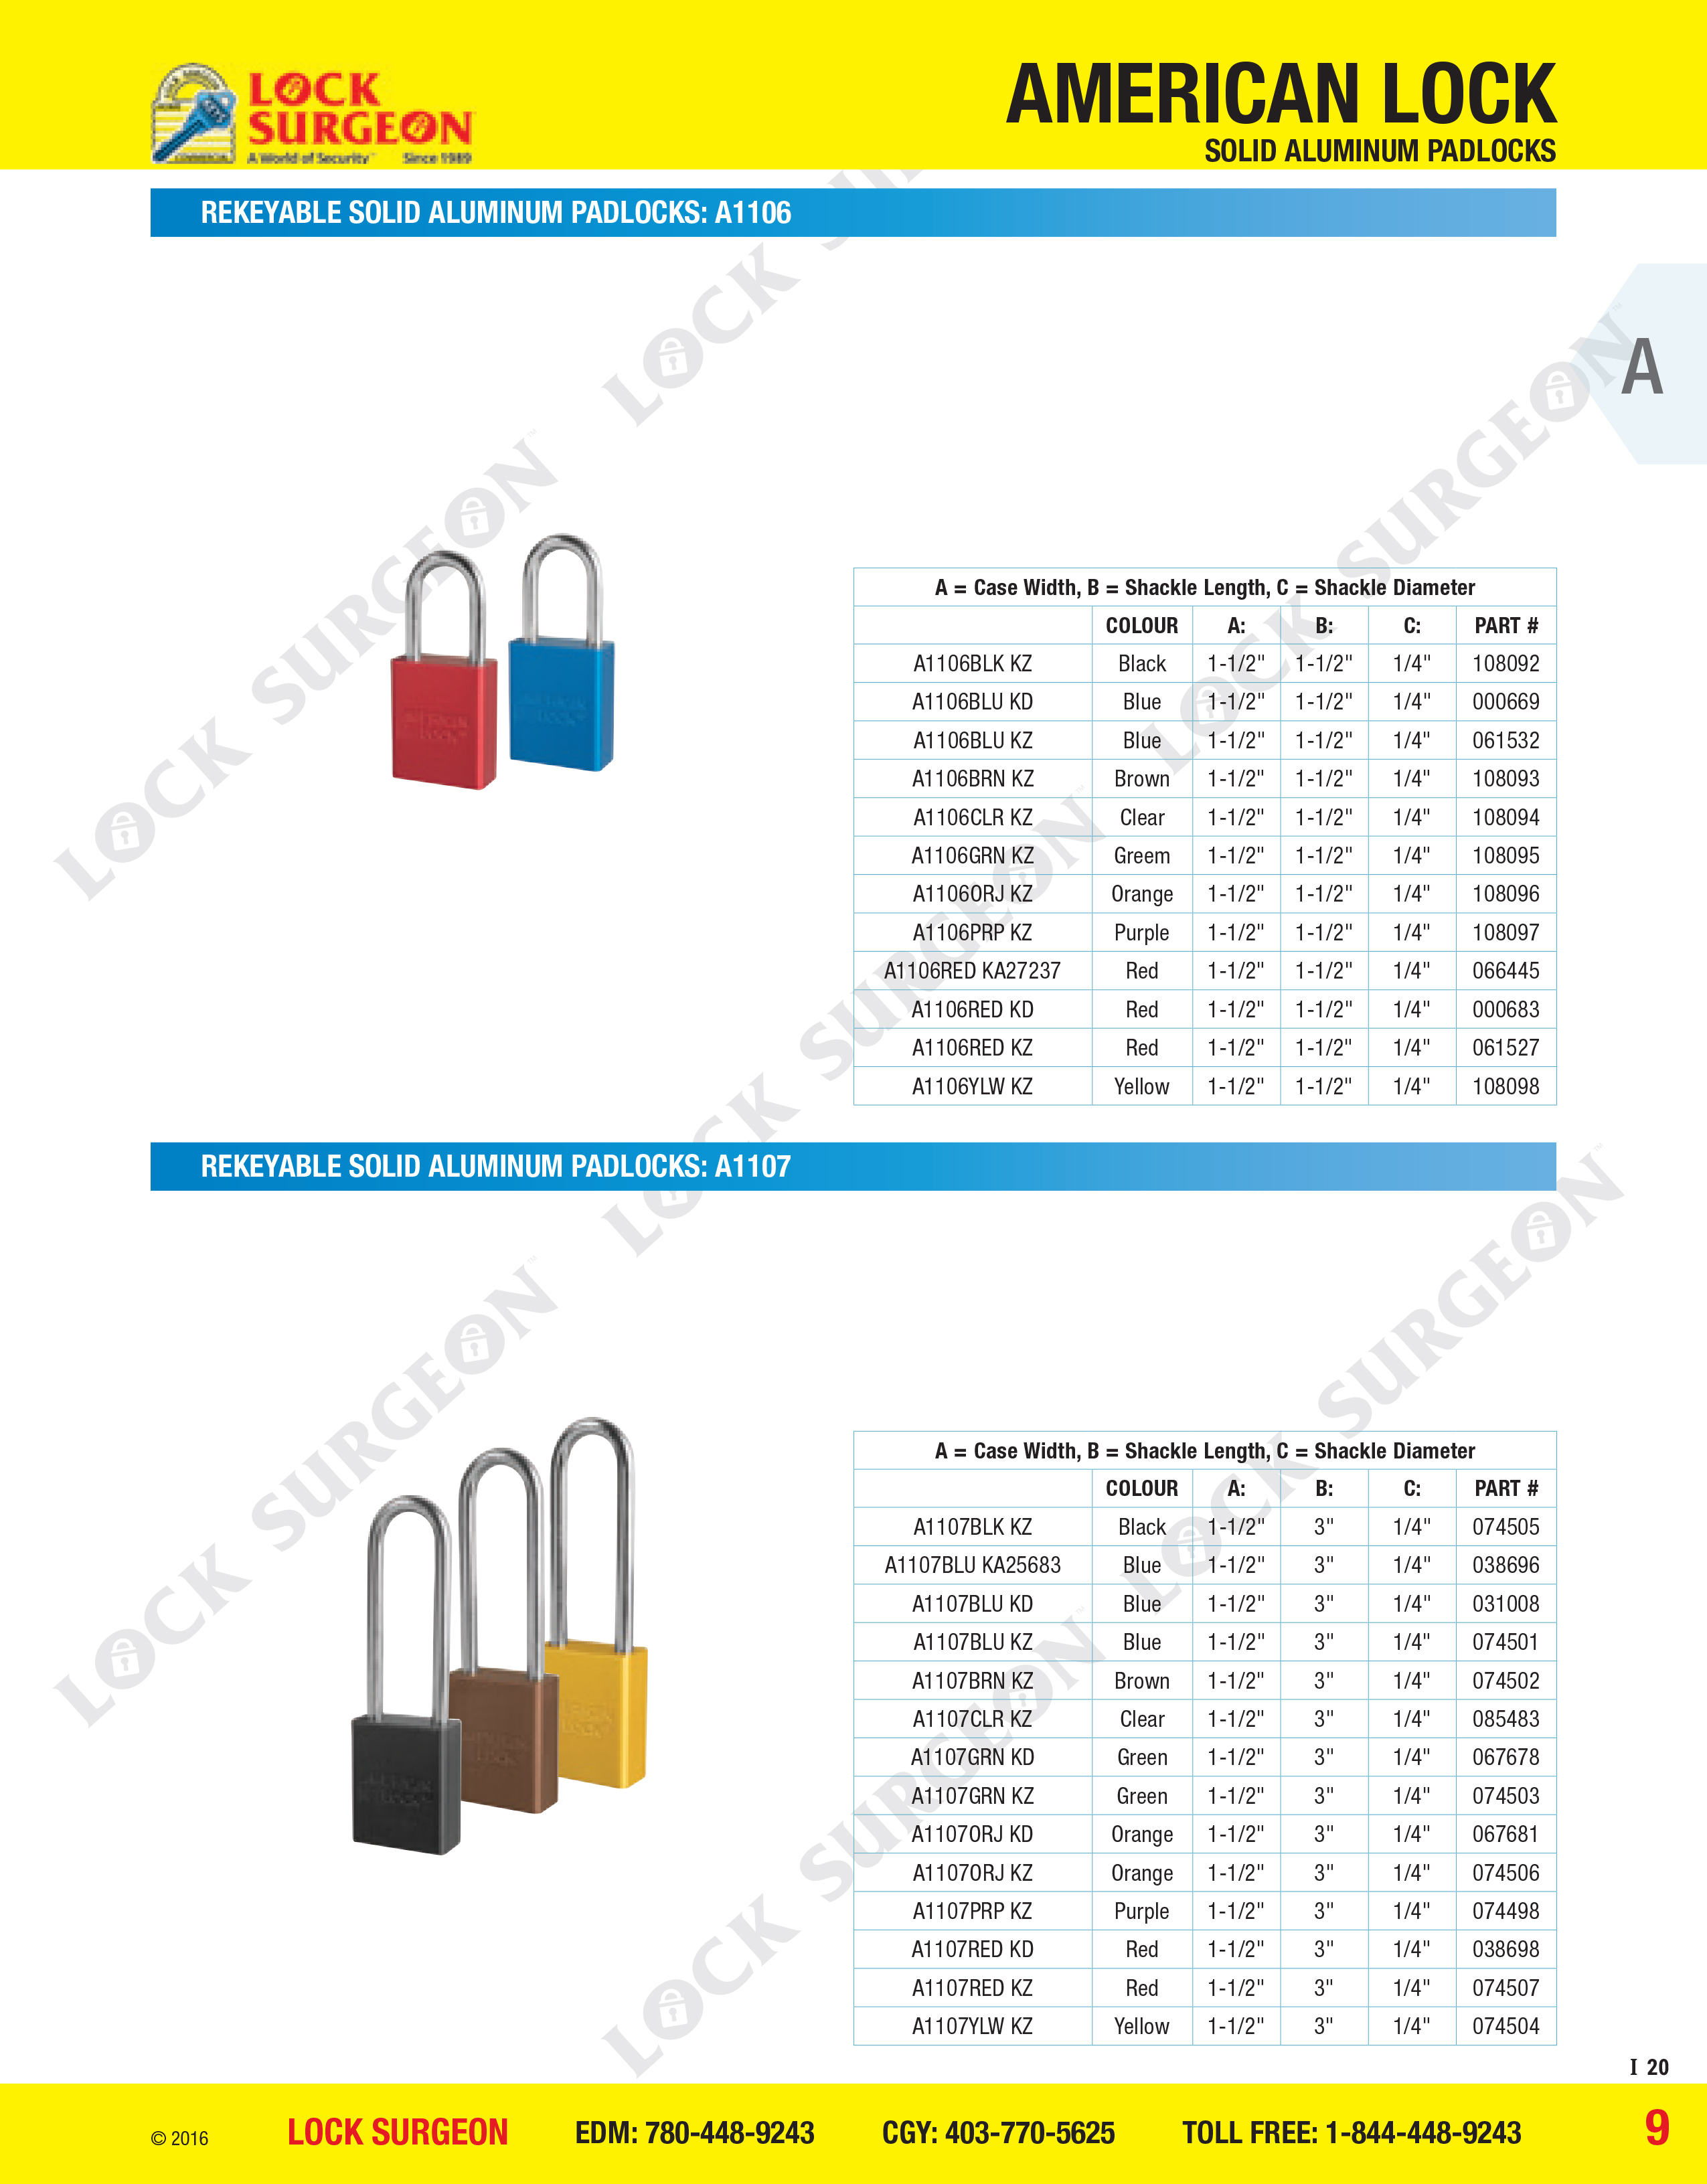 Lock Surgeon Edmonton South sell Rekeyable solid aluminium padlocks A1106 or A1107 series.